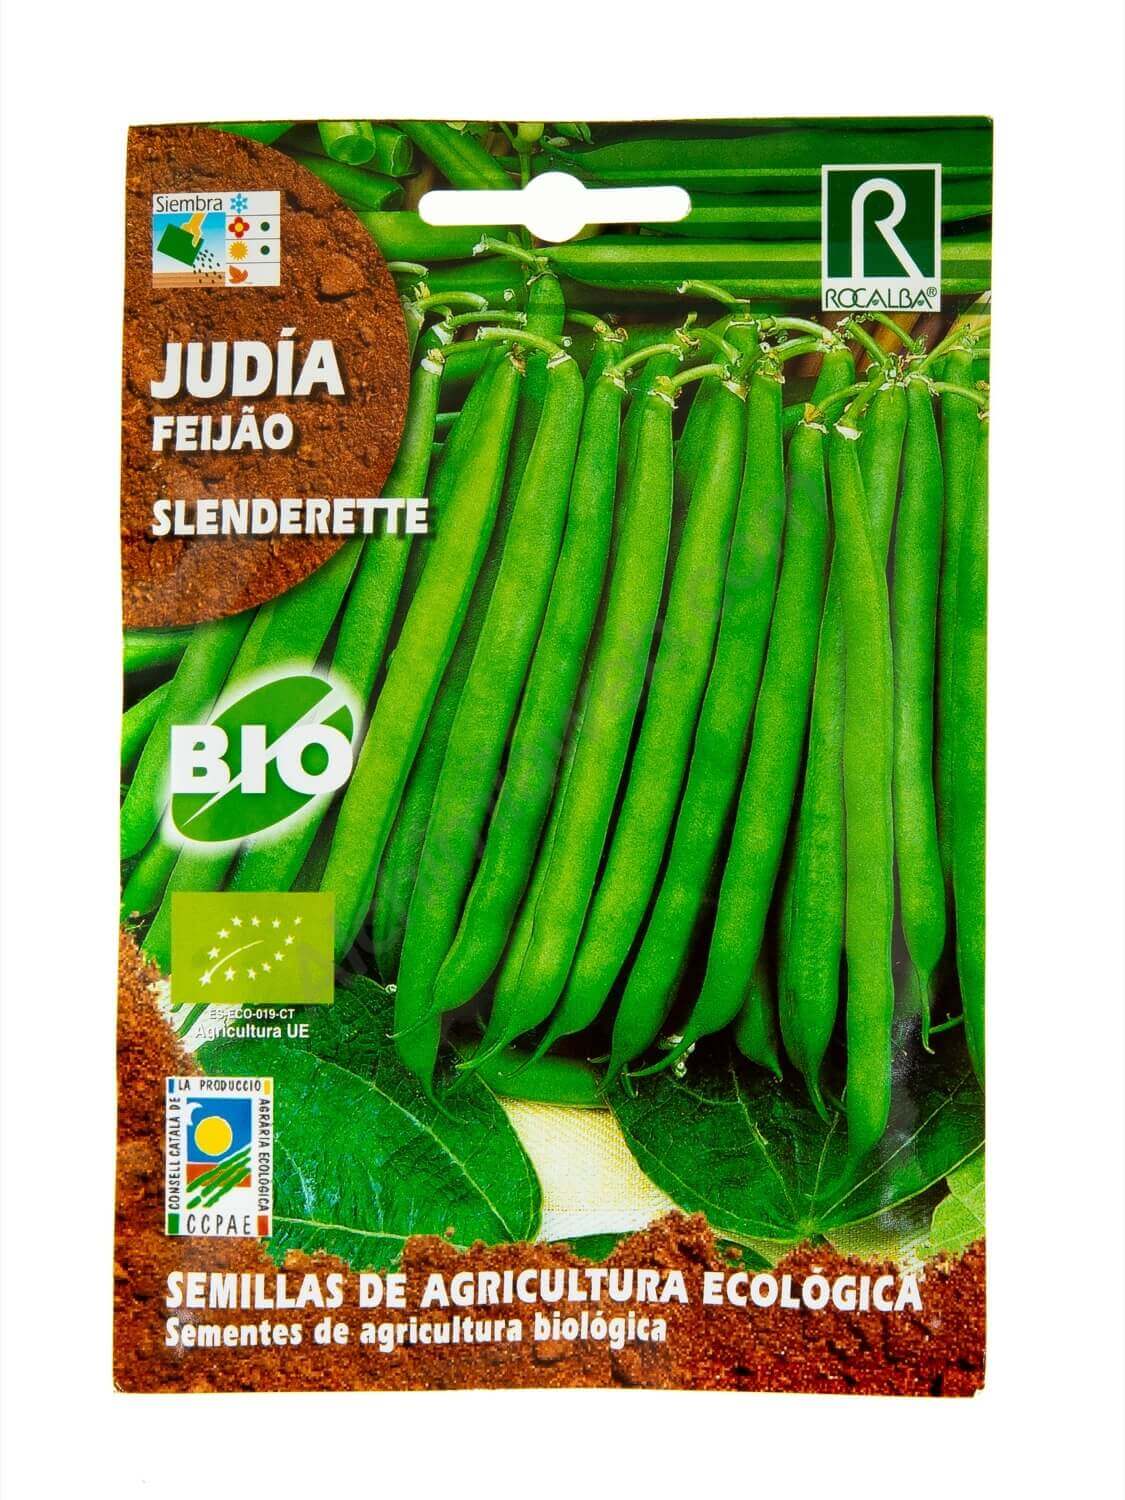 Rocalba Organic Slenderette Bean